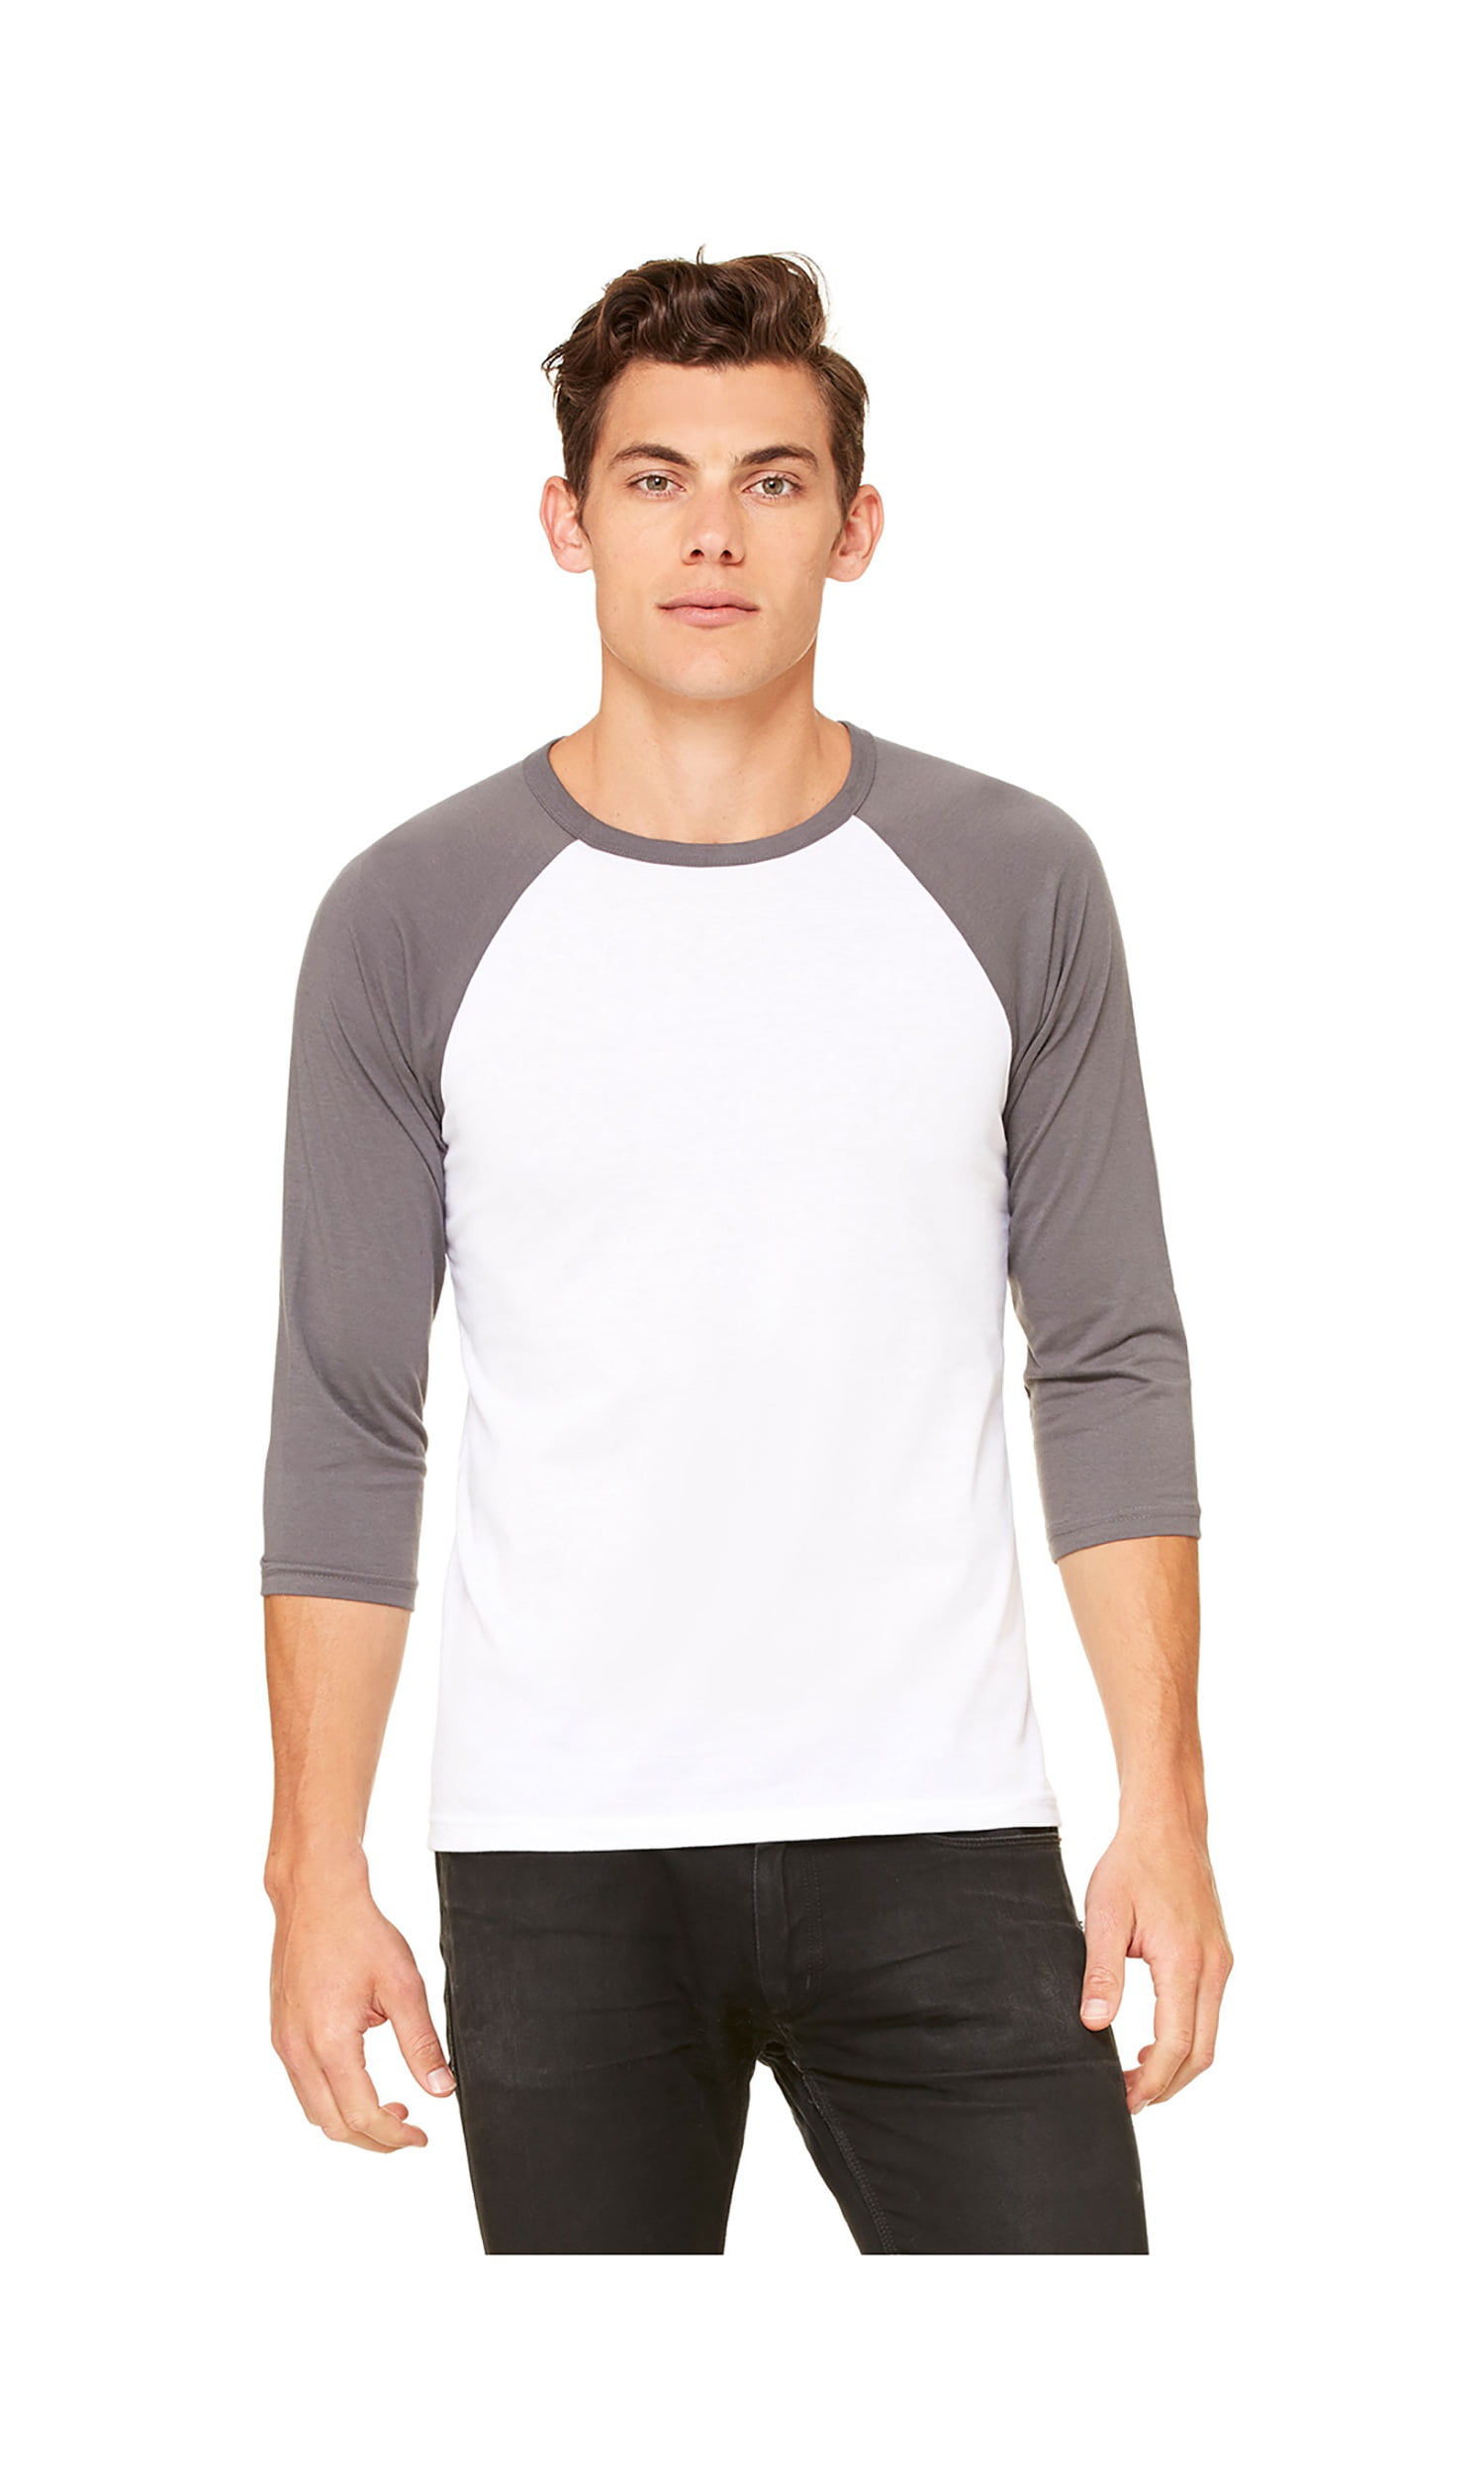 Bella Canvas Men's Combed Raglan Blended T-Shirt, Style C3200 - Walmart.com